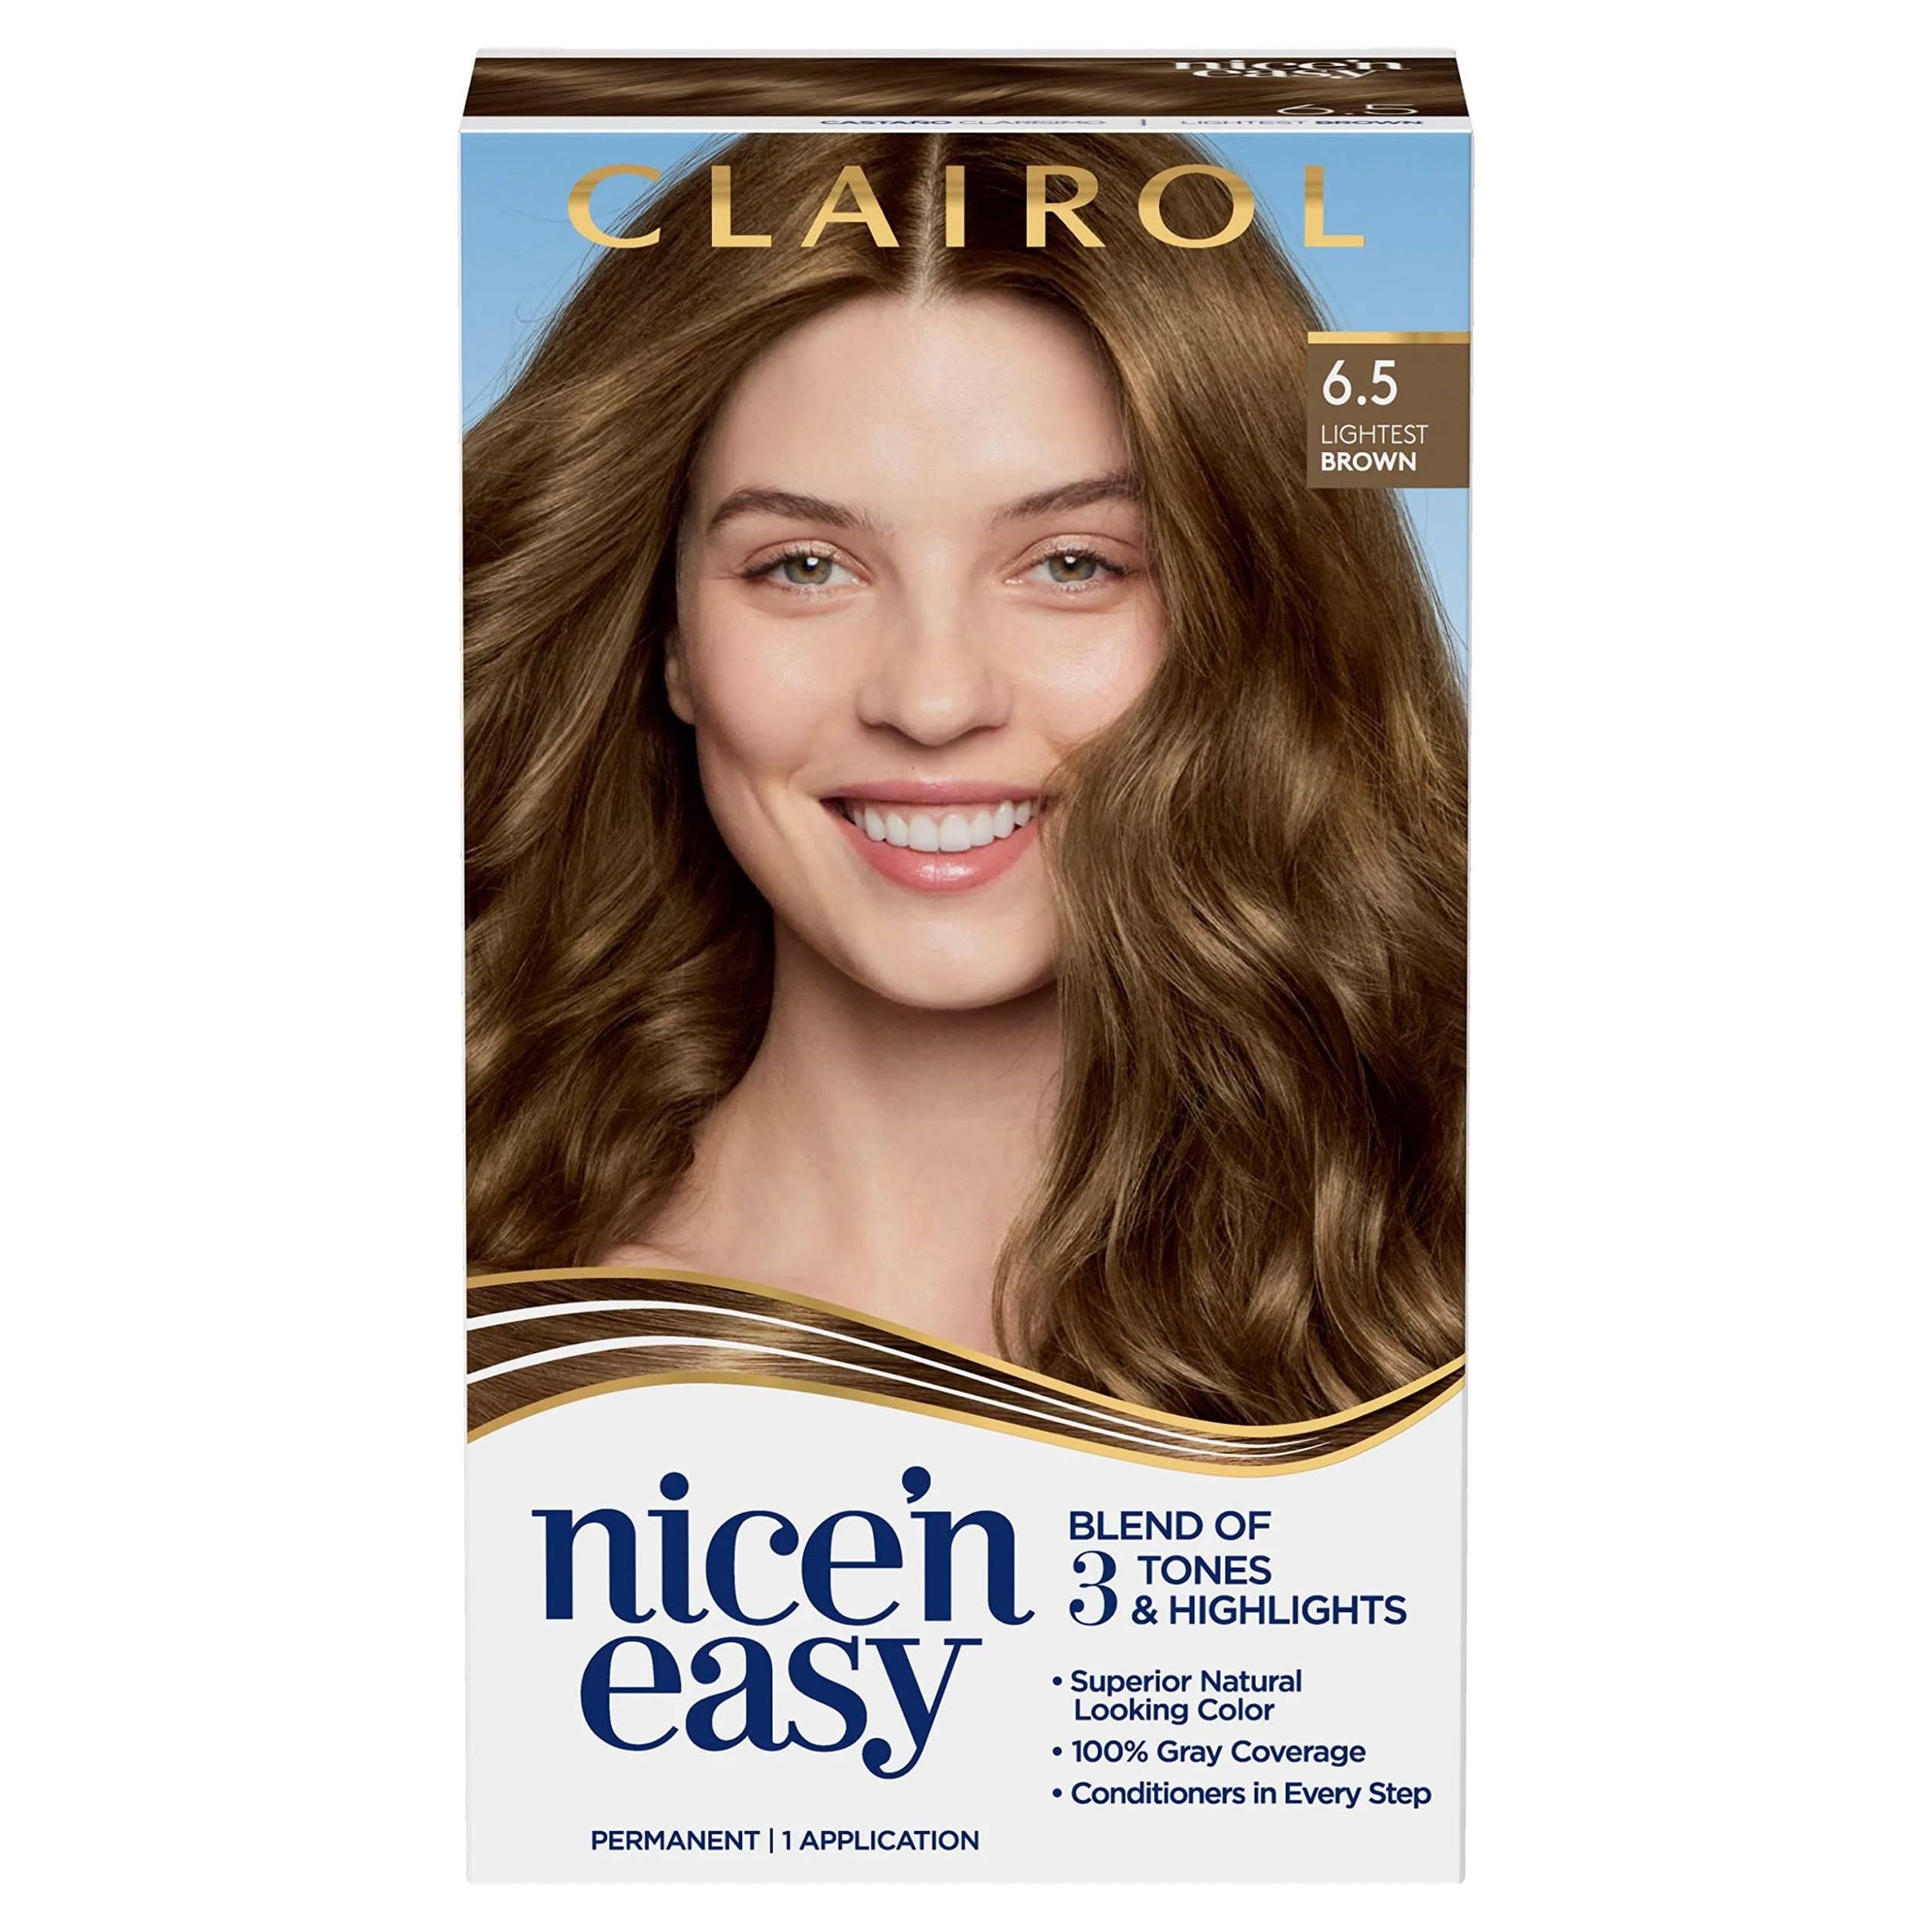 Elegant Clairol Hair Color for Stunning, Salon-Like Finish | Image